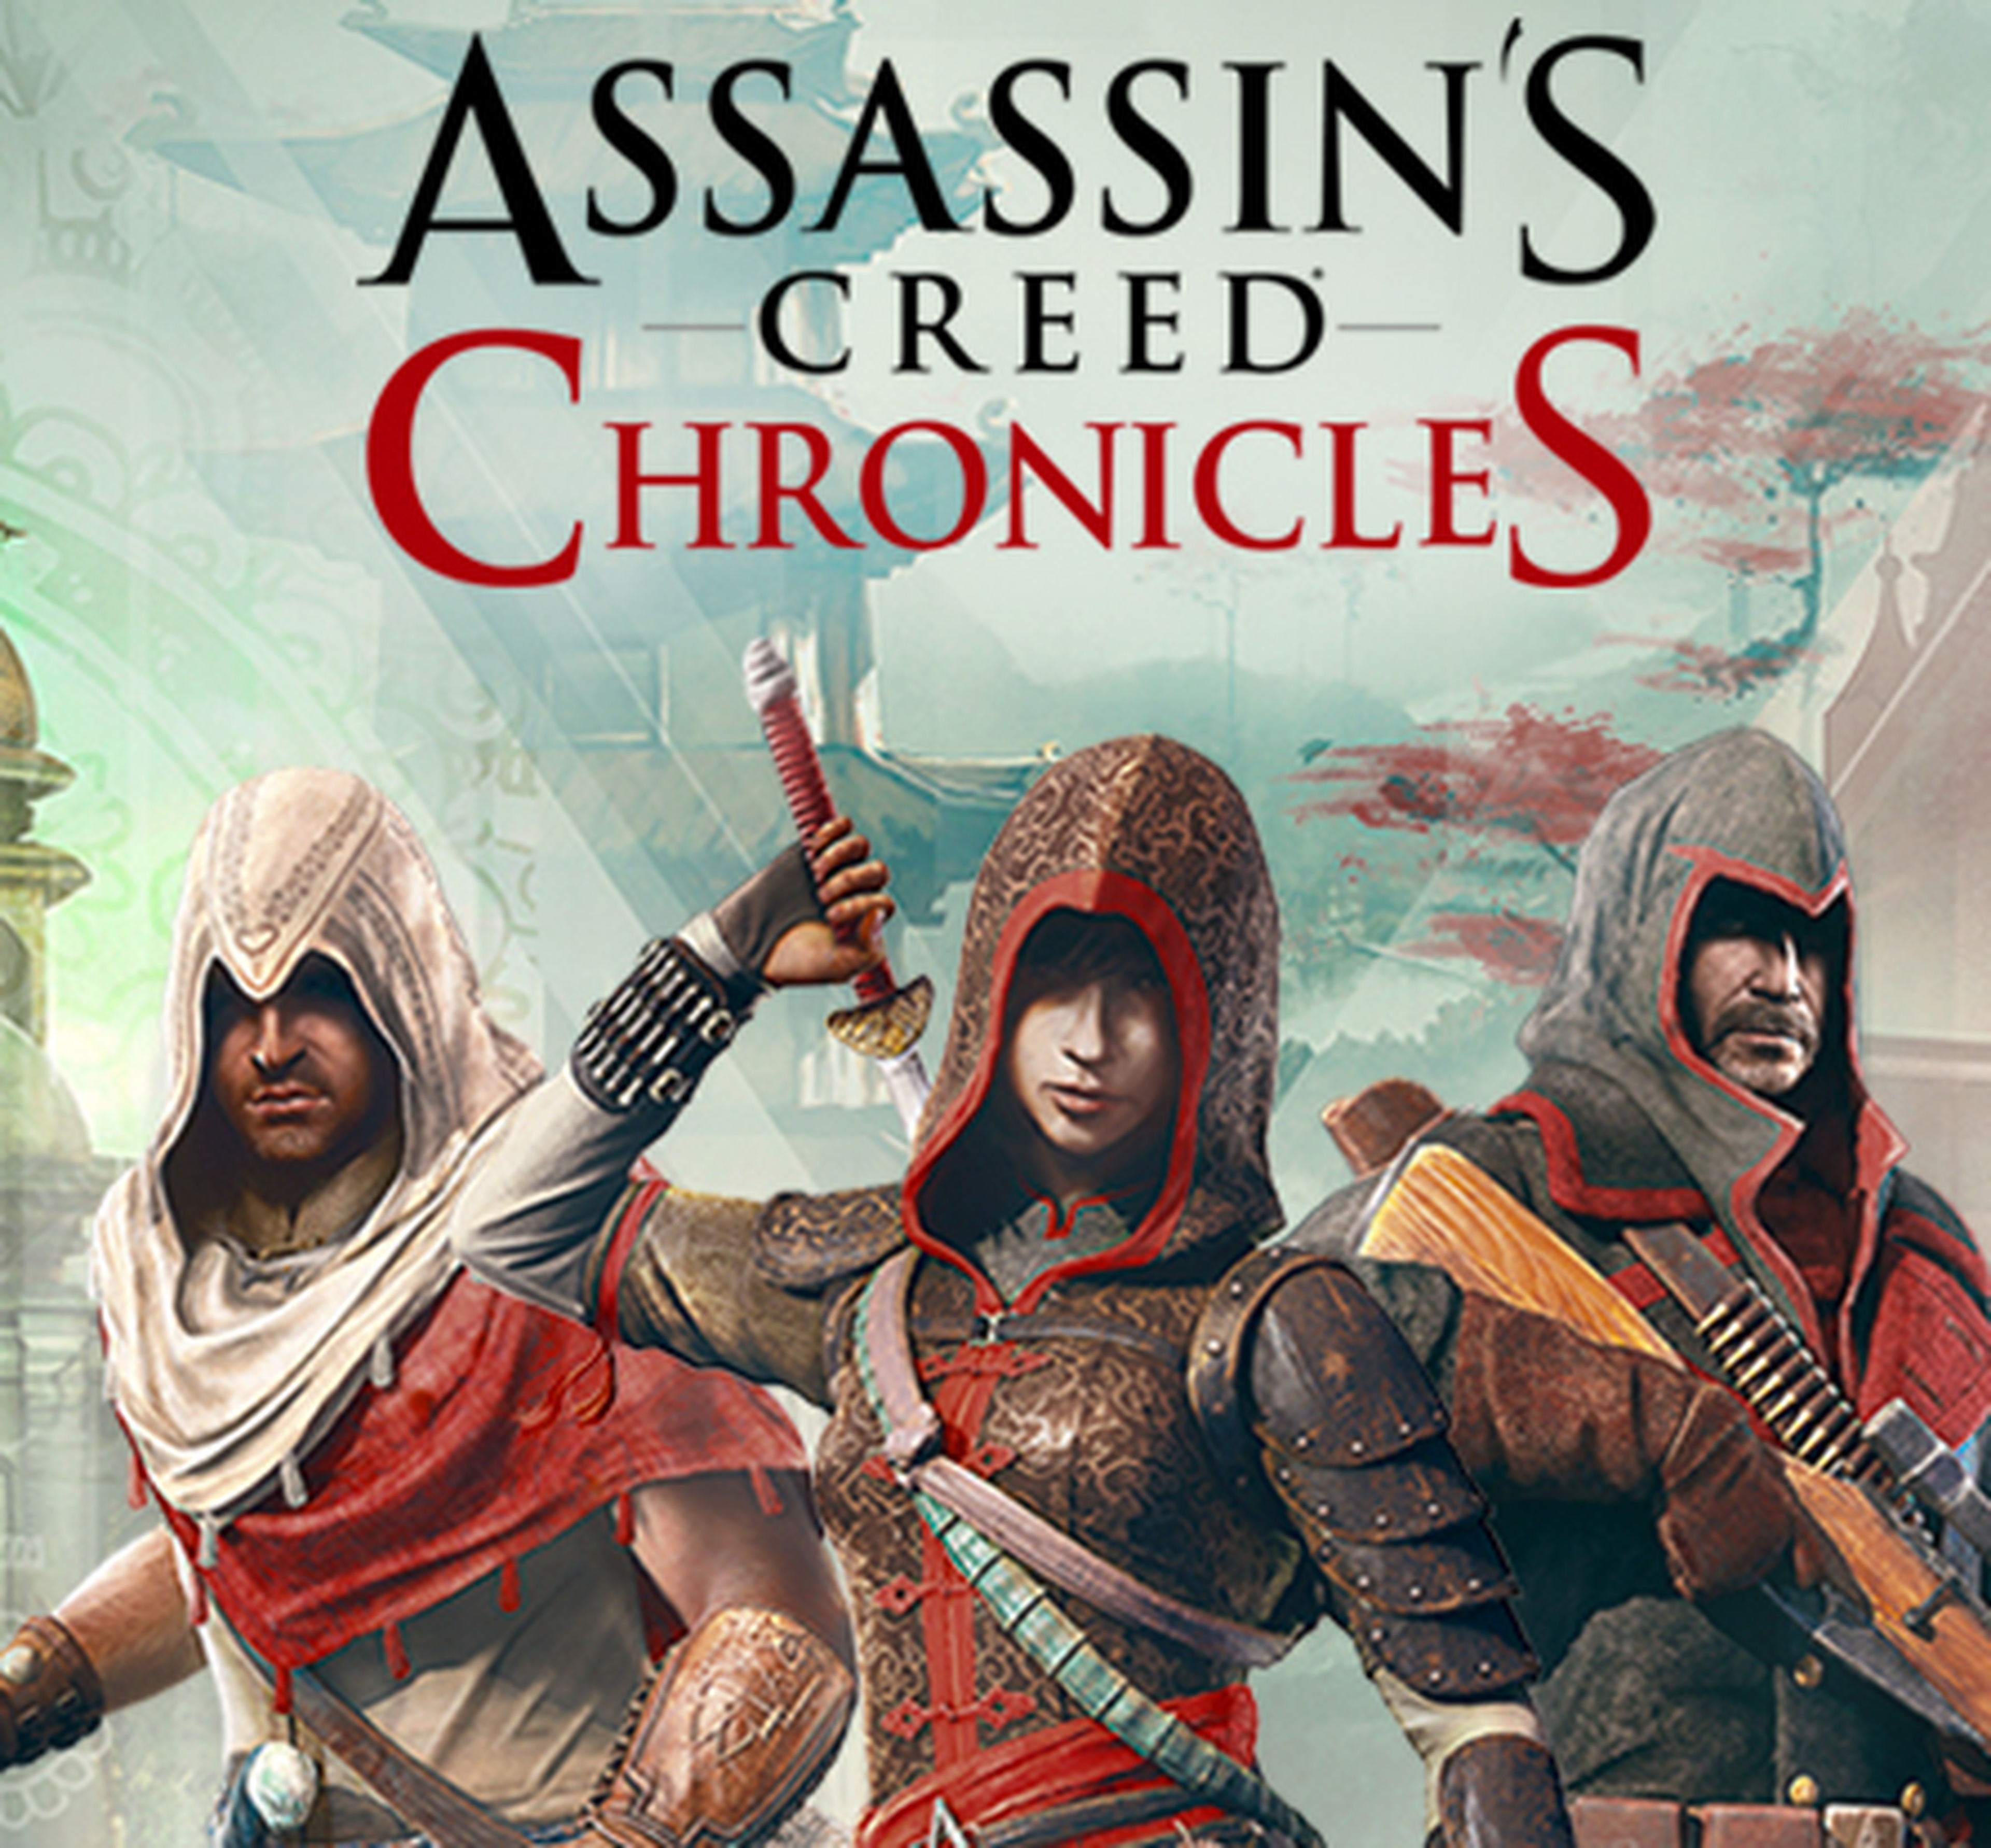 Assassin's Creed Chronicles tendrá tres protagonistas y épocas diferentes